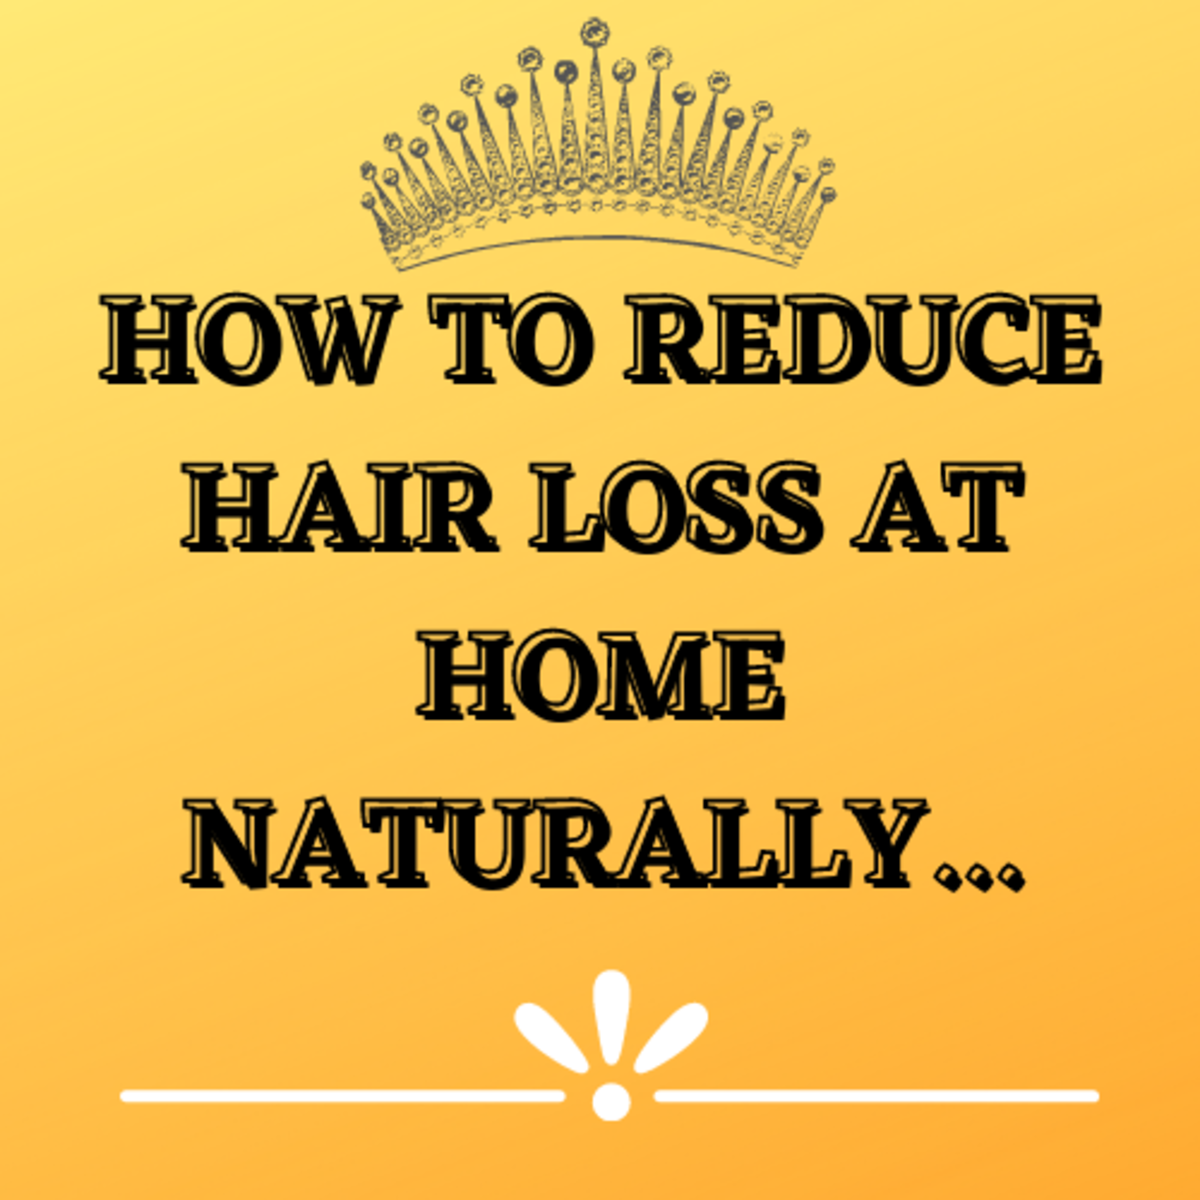 How to Reduce Hair Loss Naturally at Home